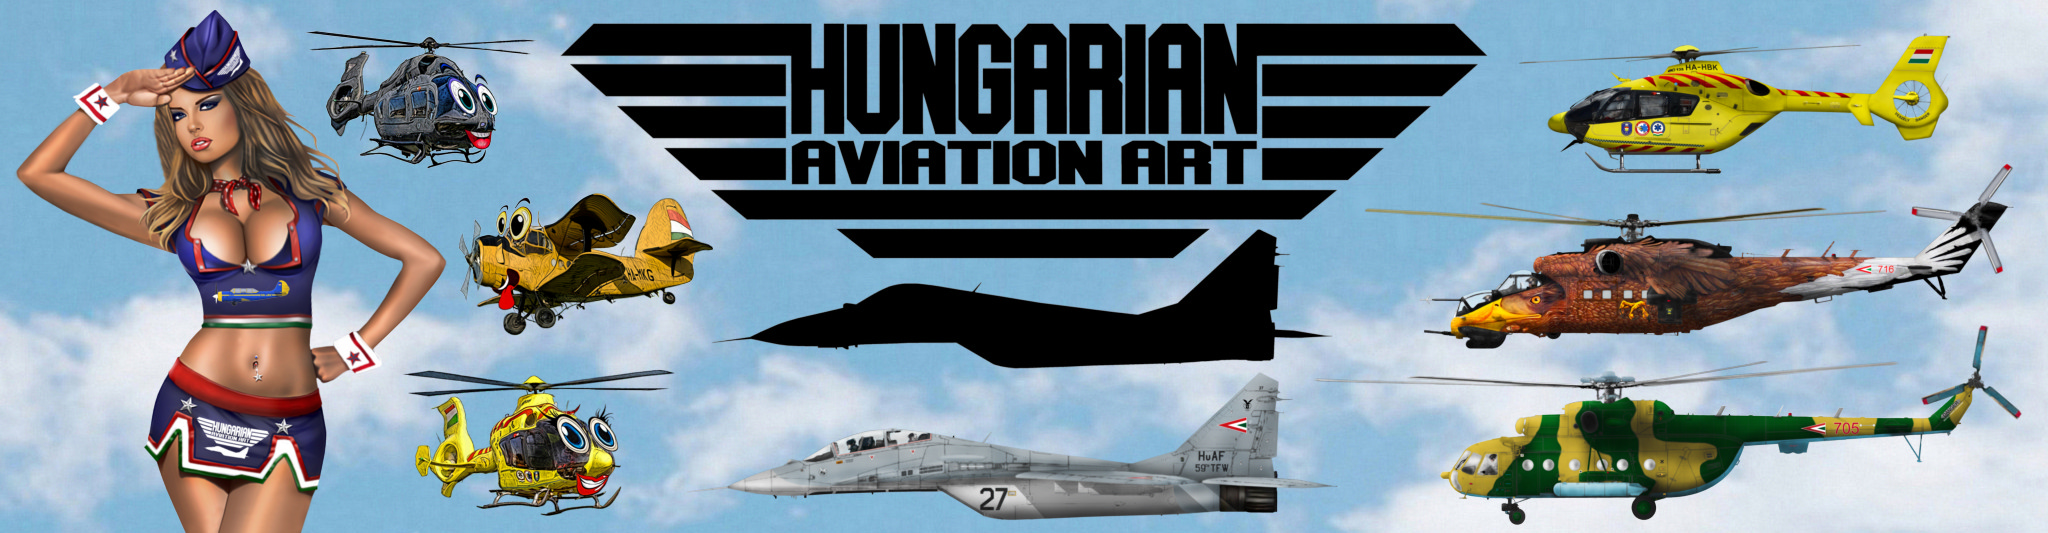 Hungarian Aviation Art